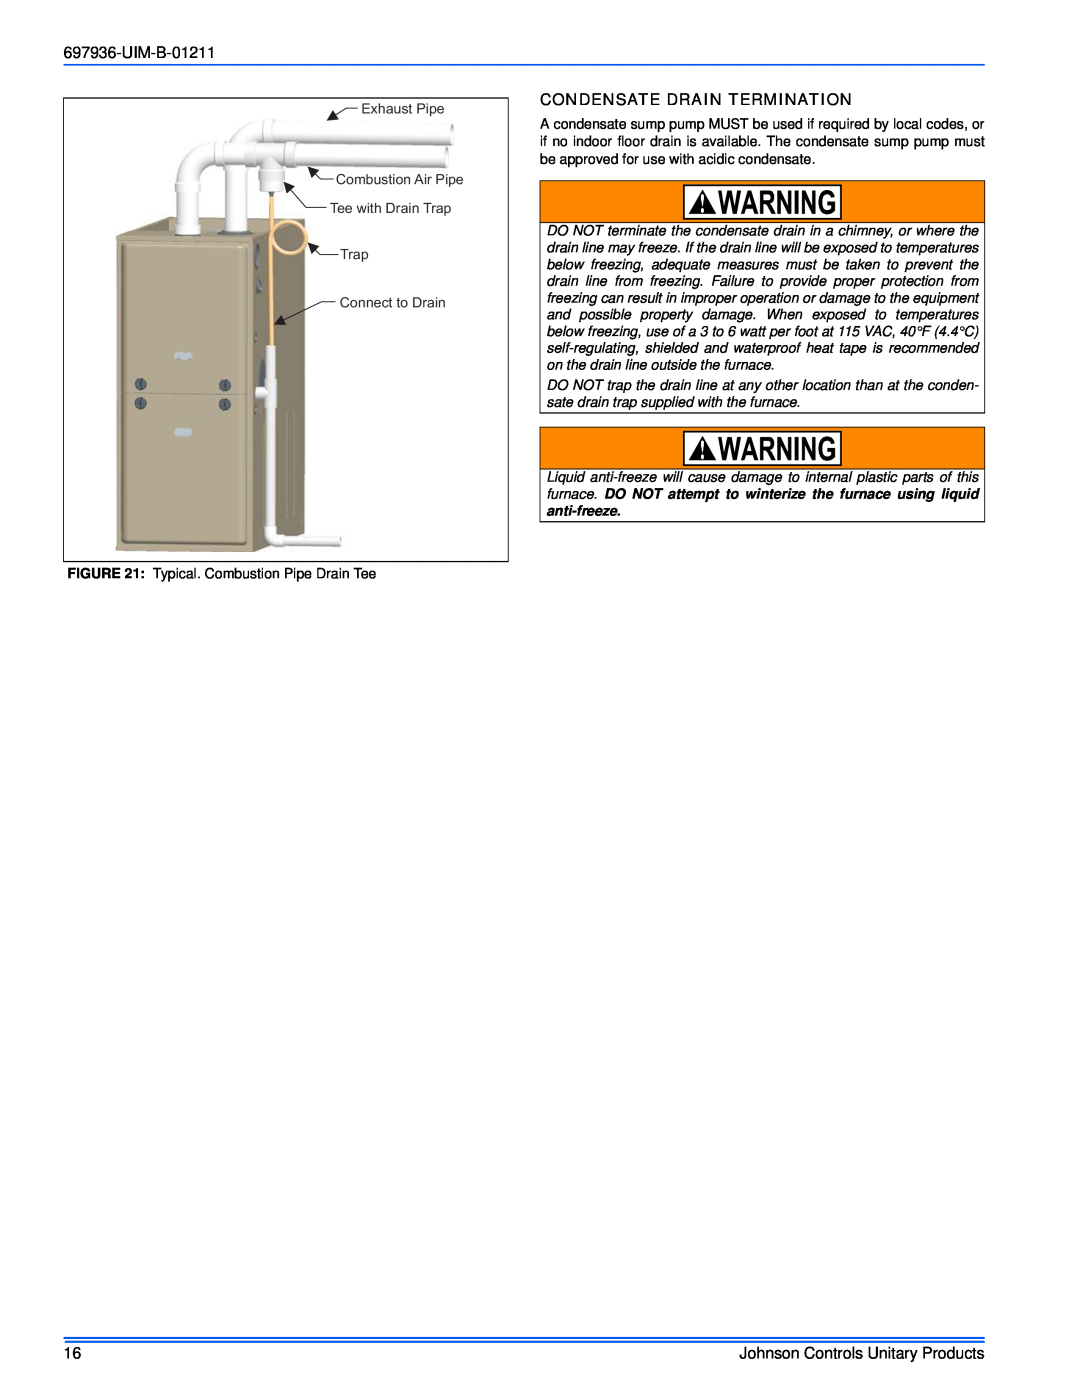 Johnson Controls TM9X*MP installation manual UIM-B-01211, Condensate Drain Termination, Typical. Combustion Pipe Drain Tee 